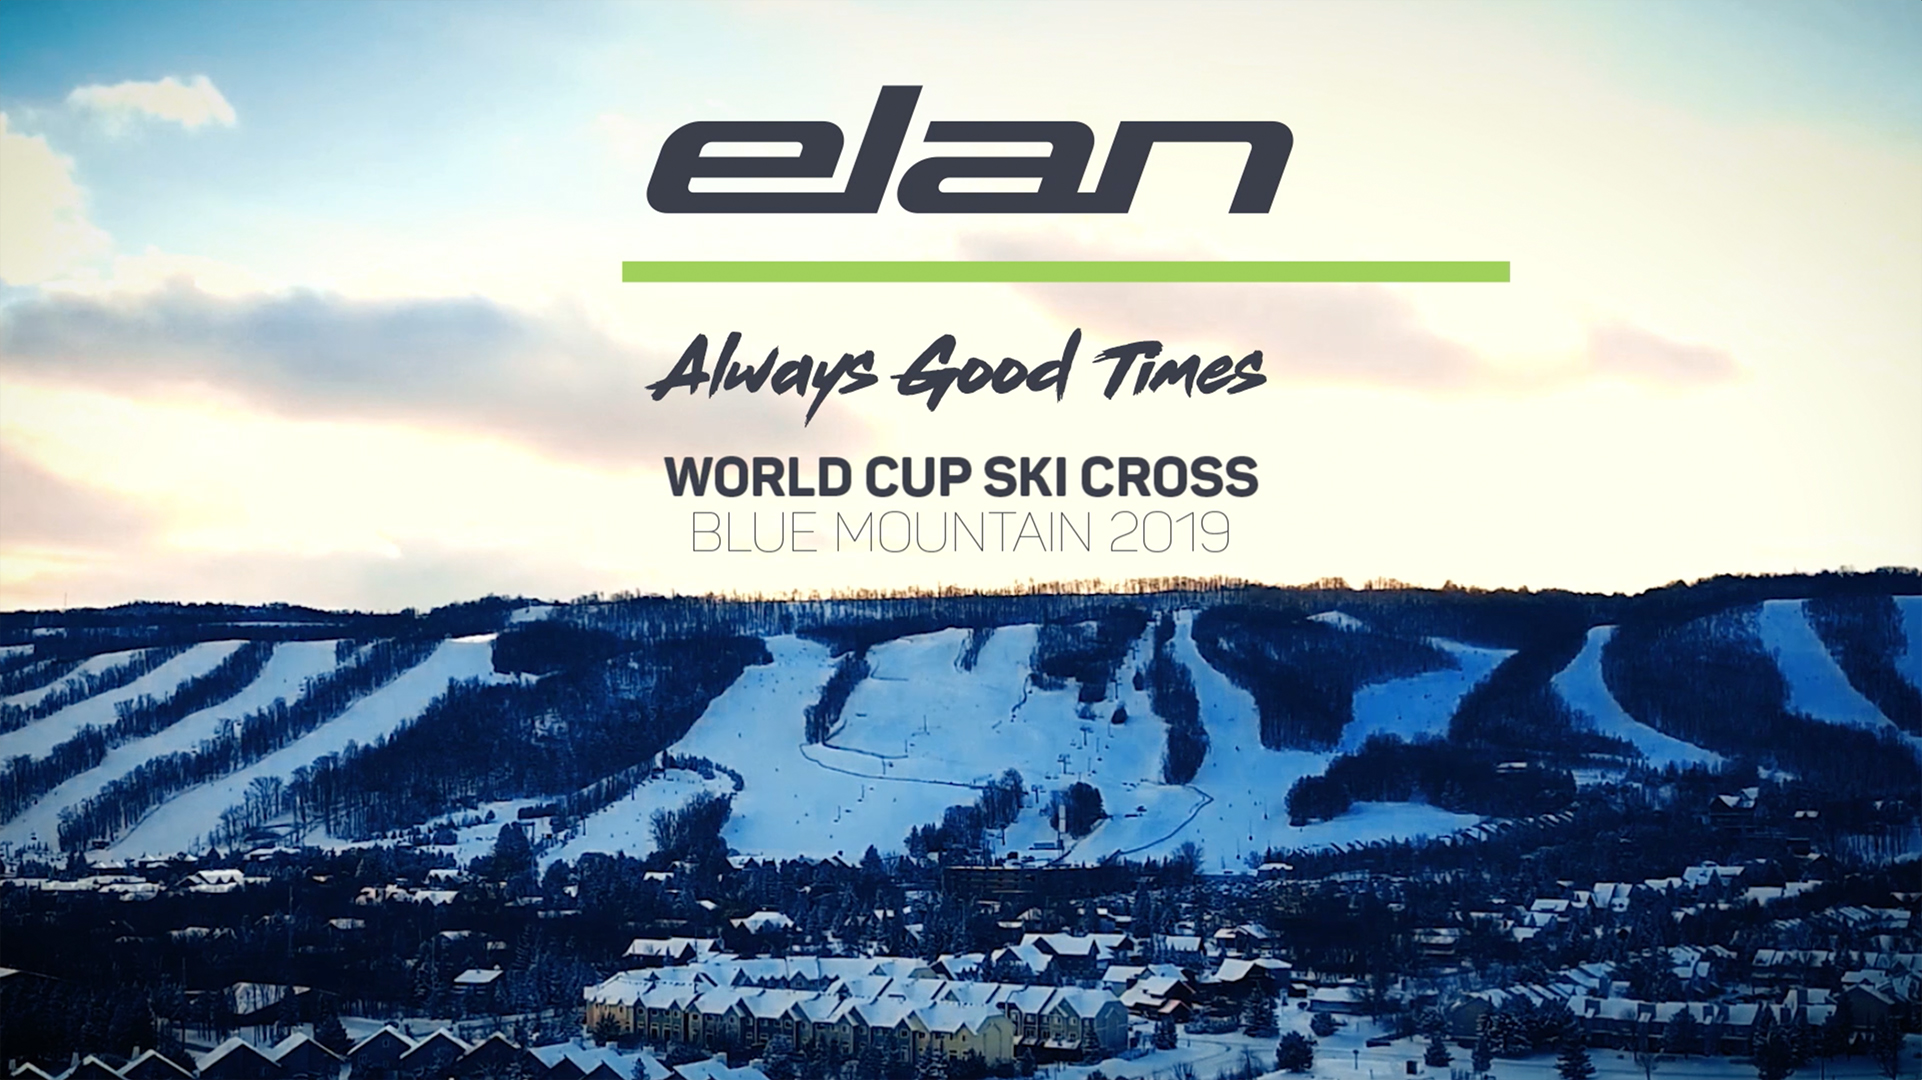 World Cup Ski Cross